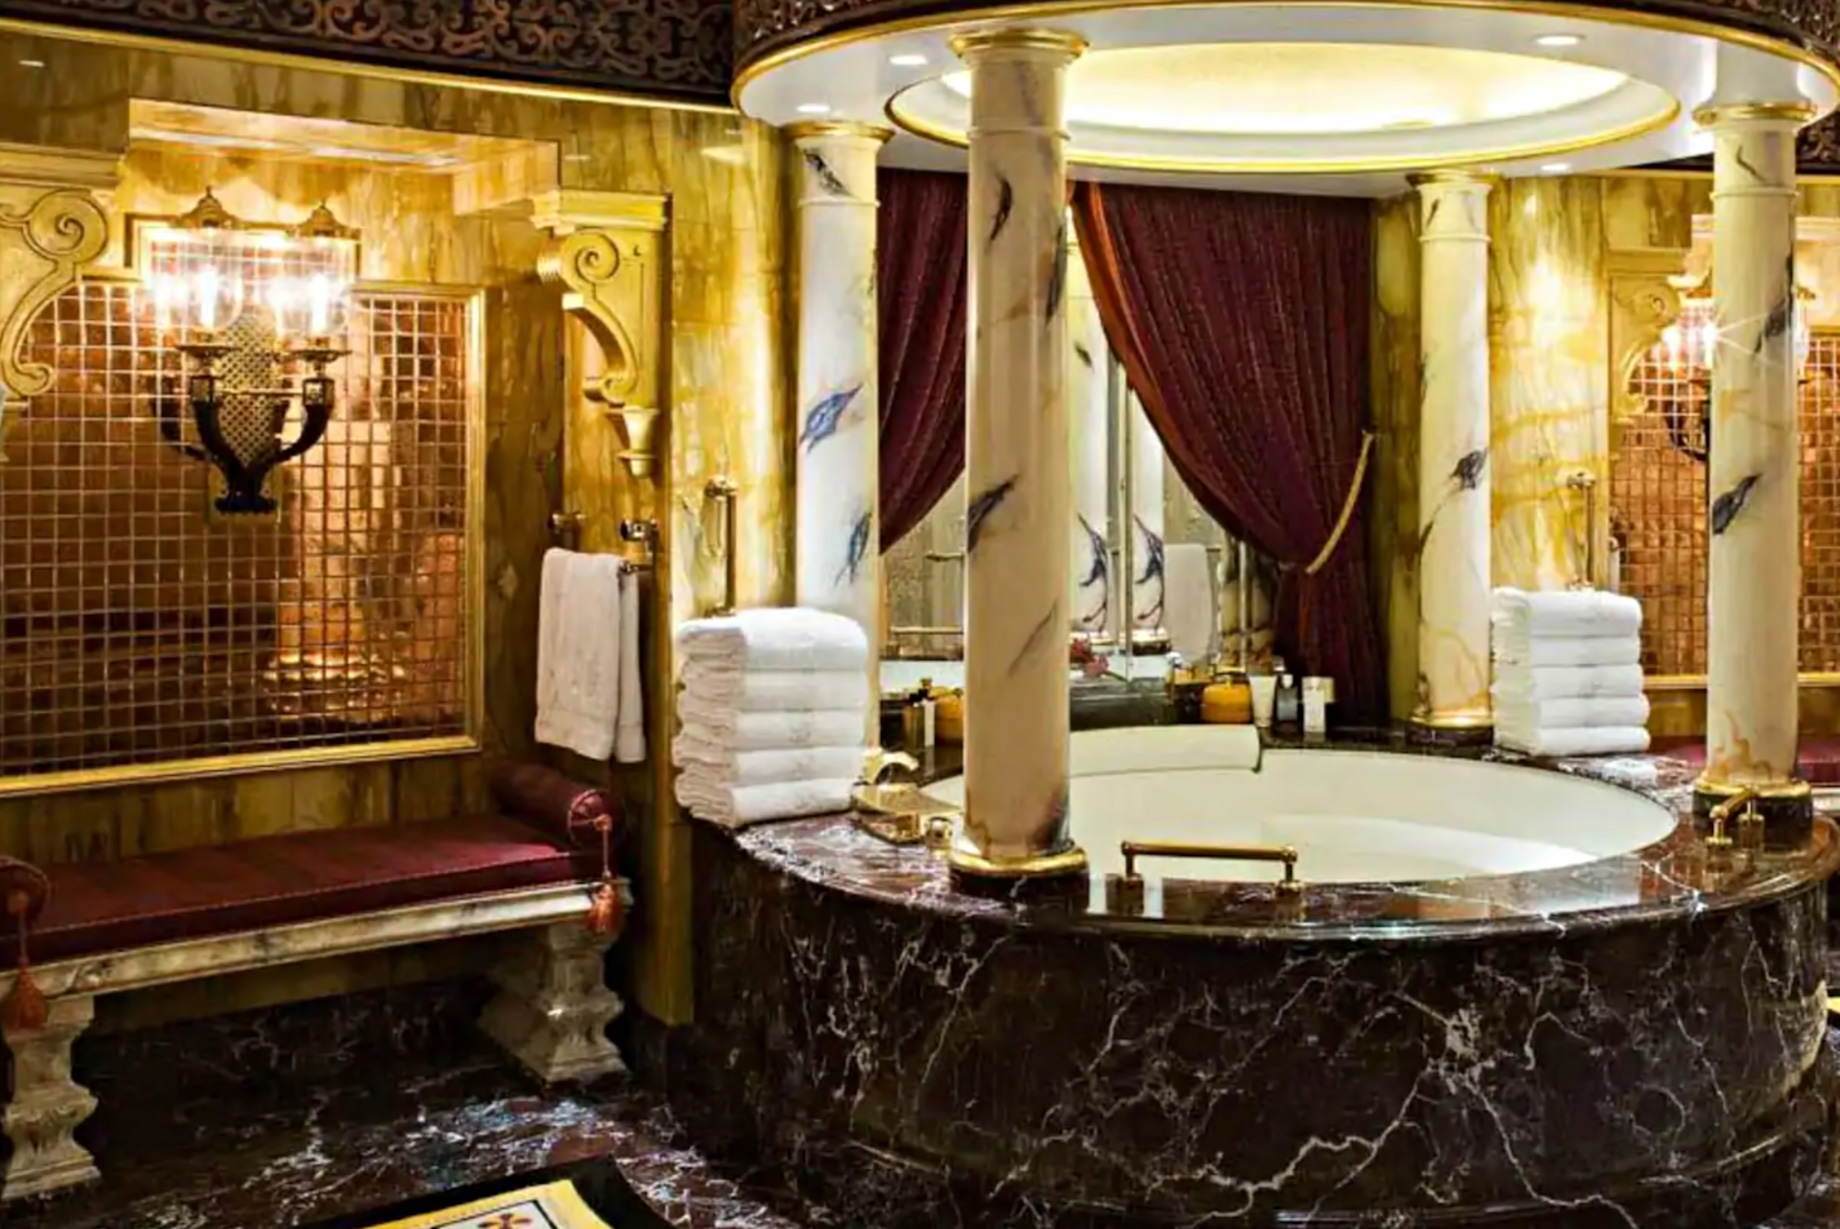 Burj Al Arab Jumeirah Hotel – Dubai, UAE – Royal Suite Bathroom